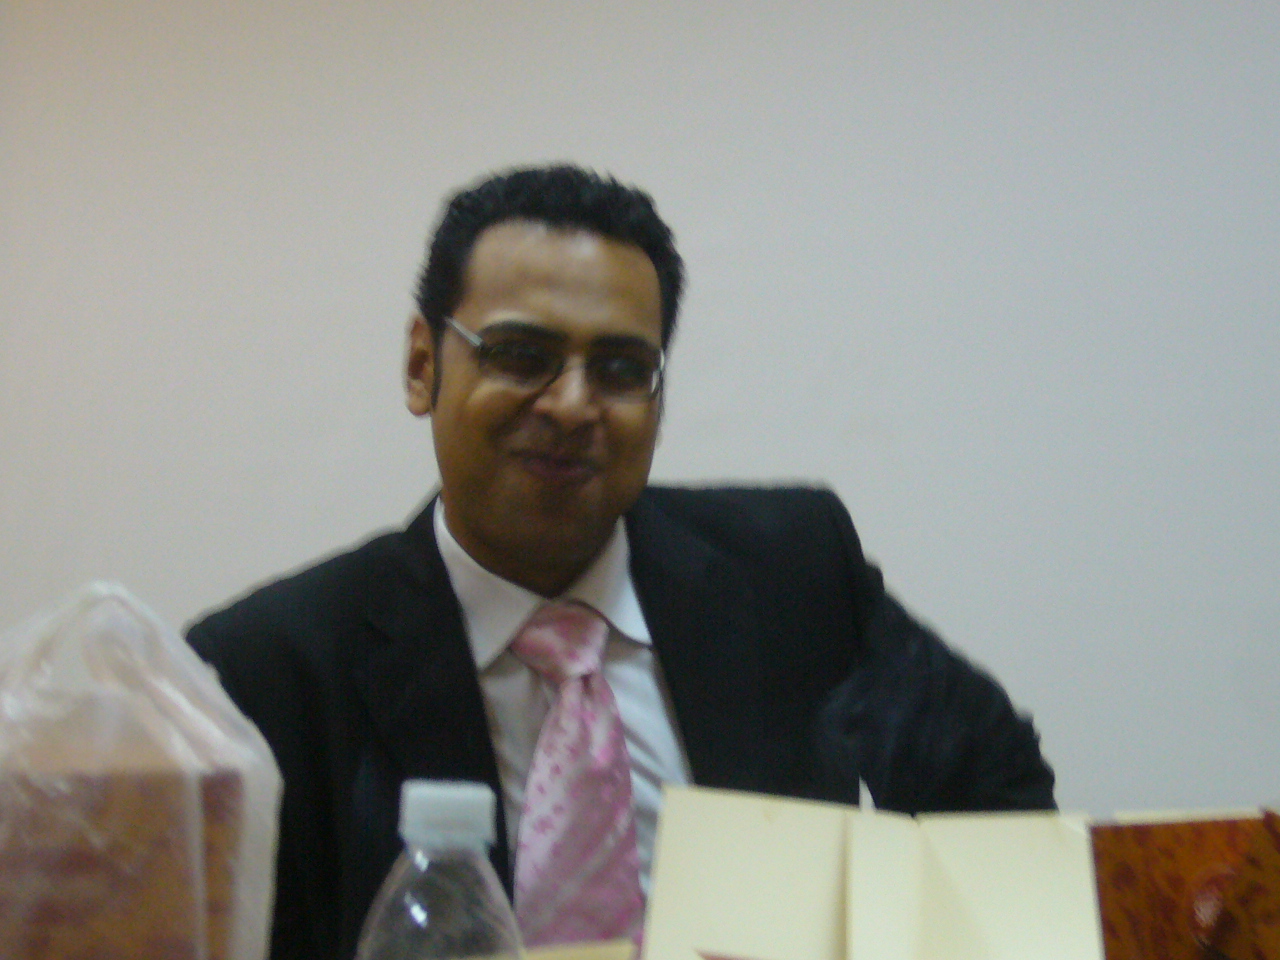 Mohammed Ahmed Abu Khalil